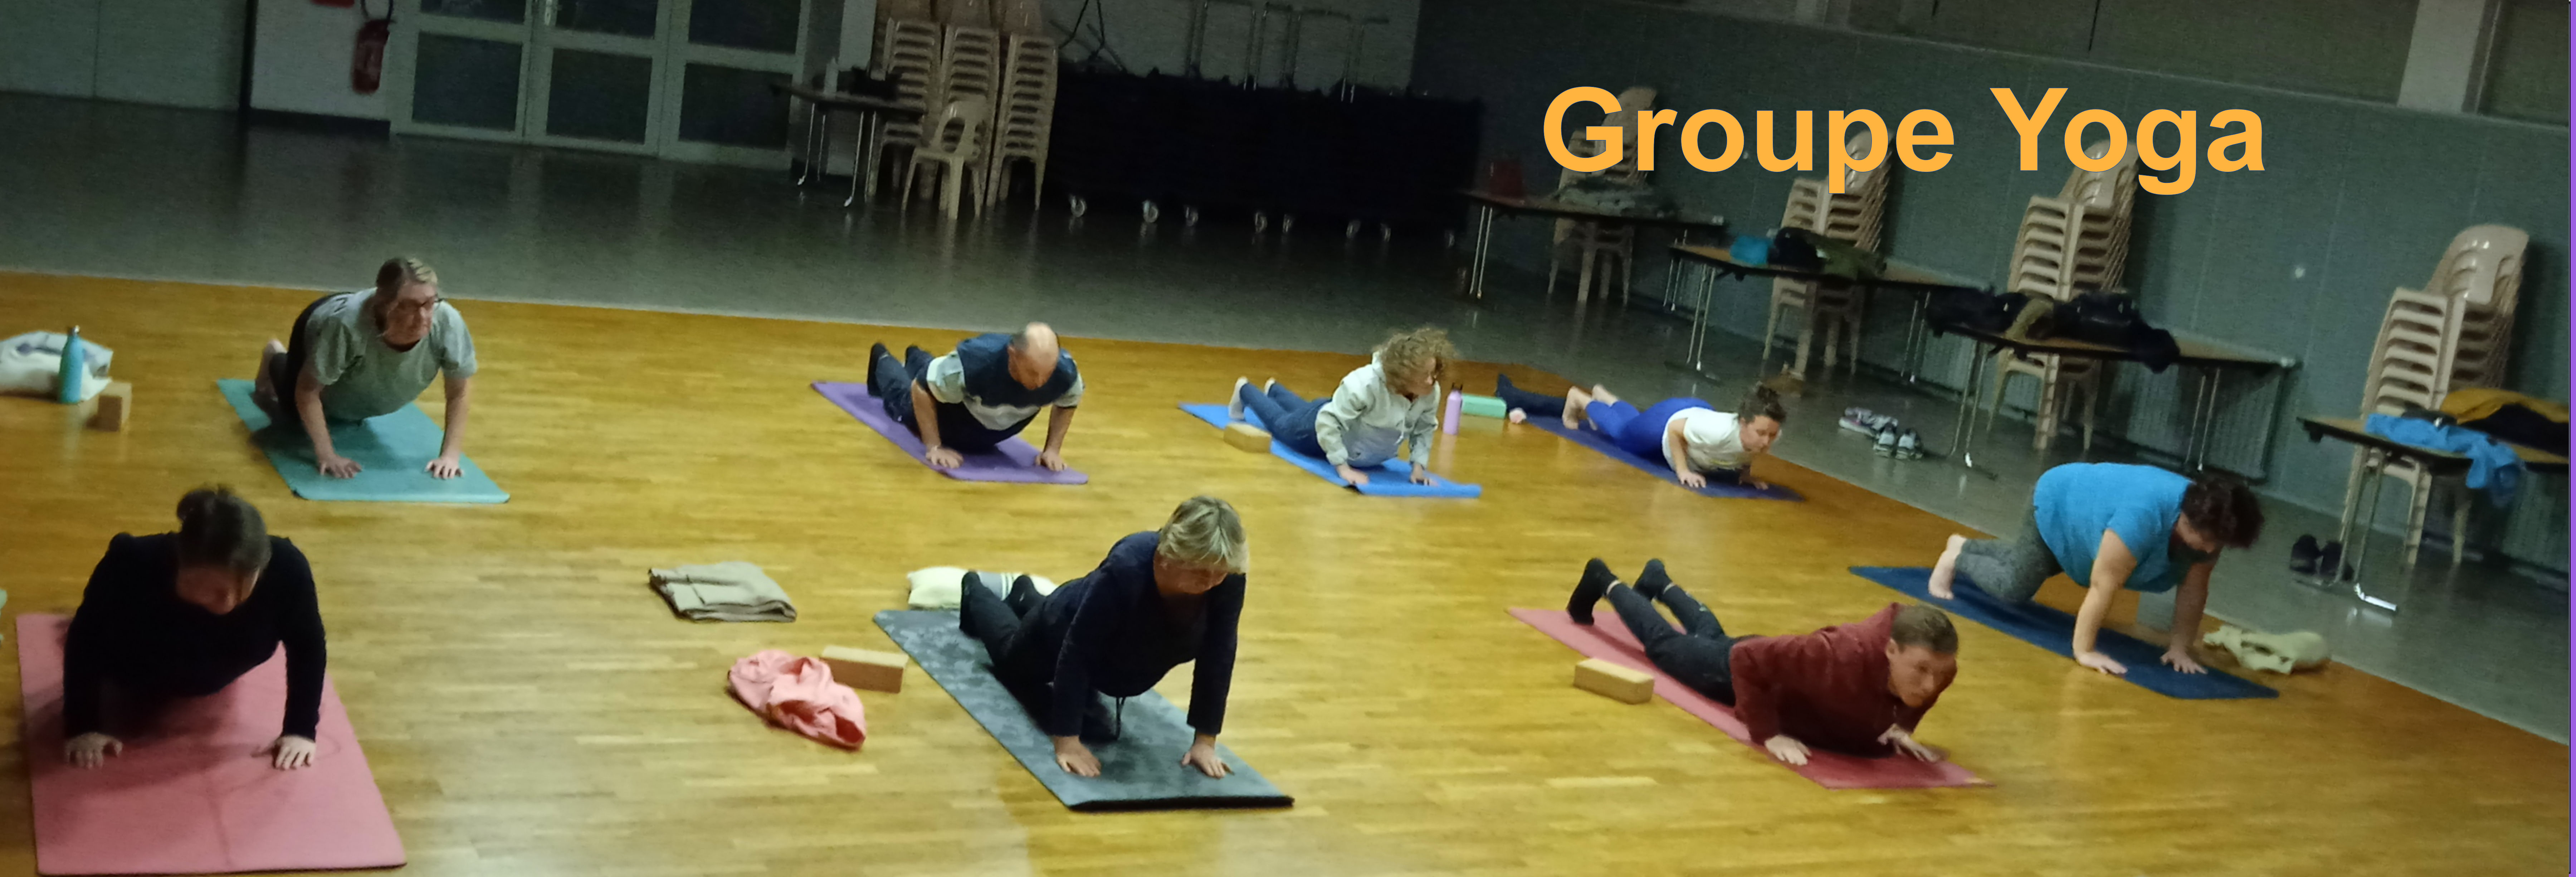 Groupe Yoga